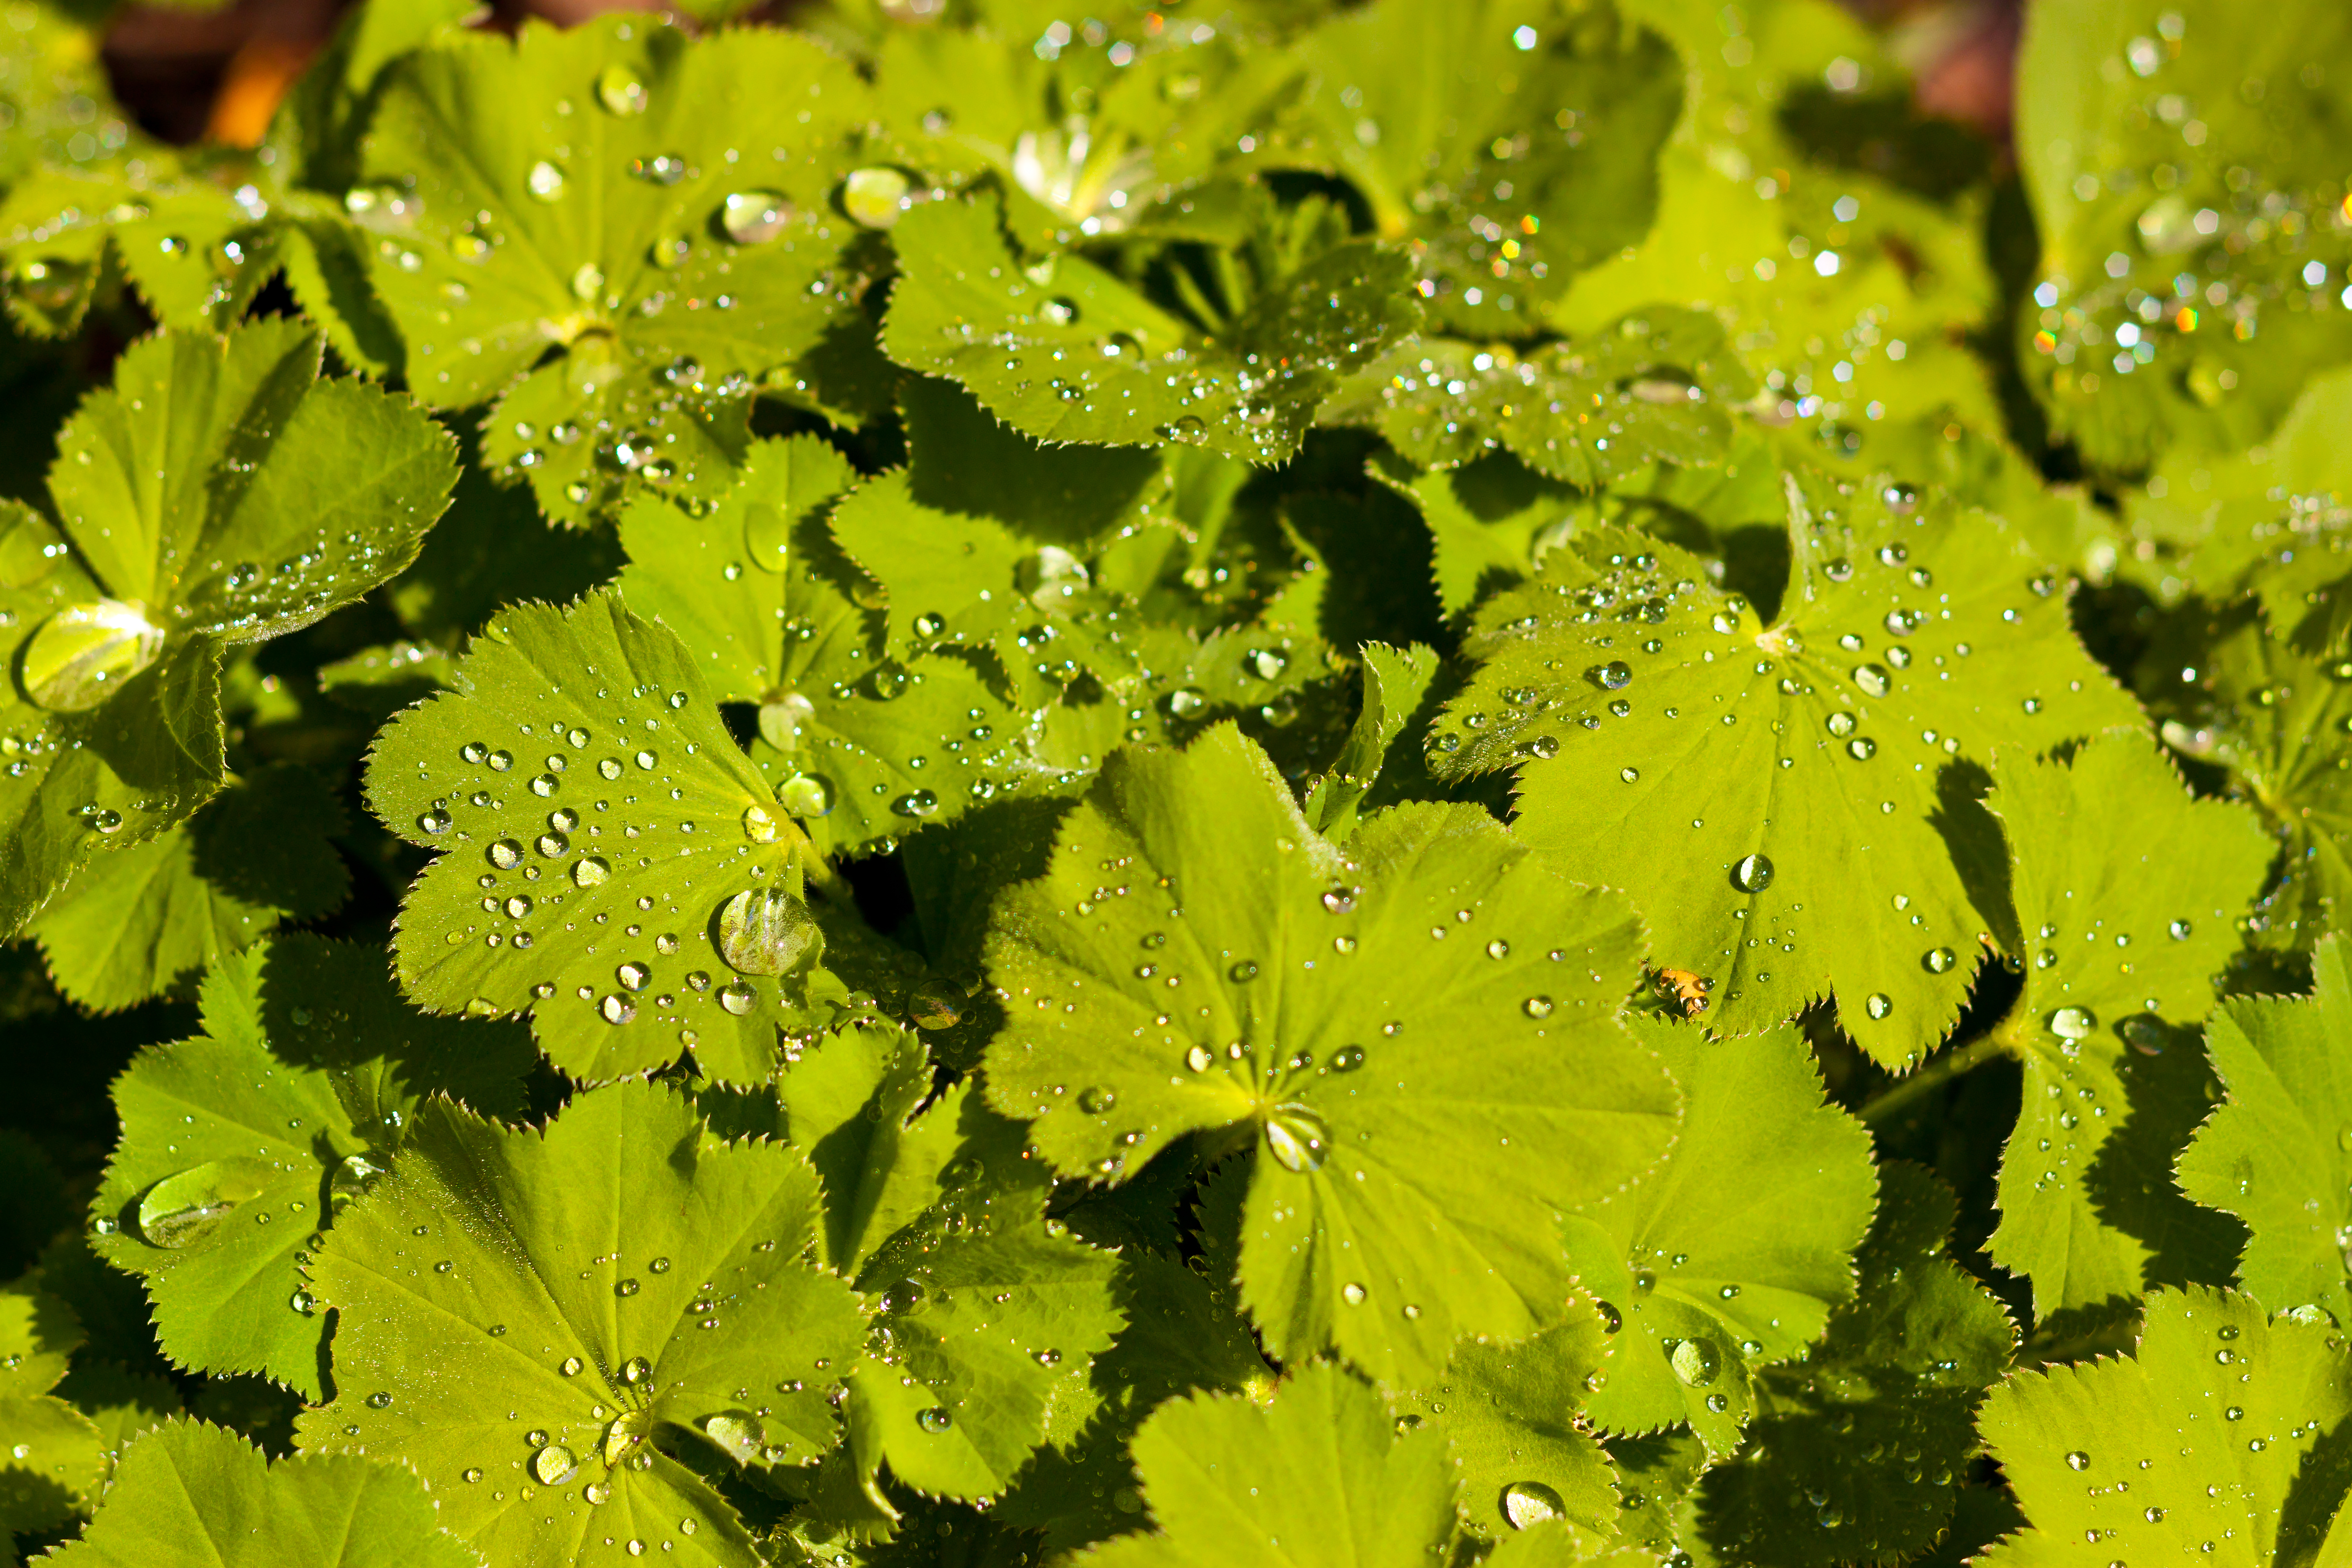 Alchemilla vulgaris with raindrops